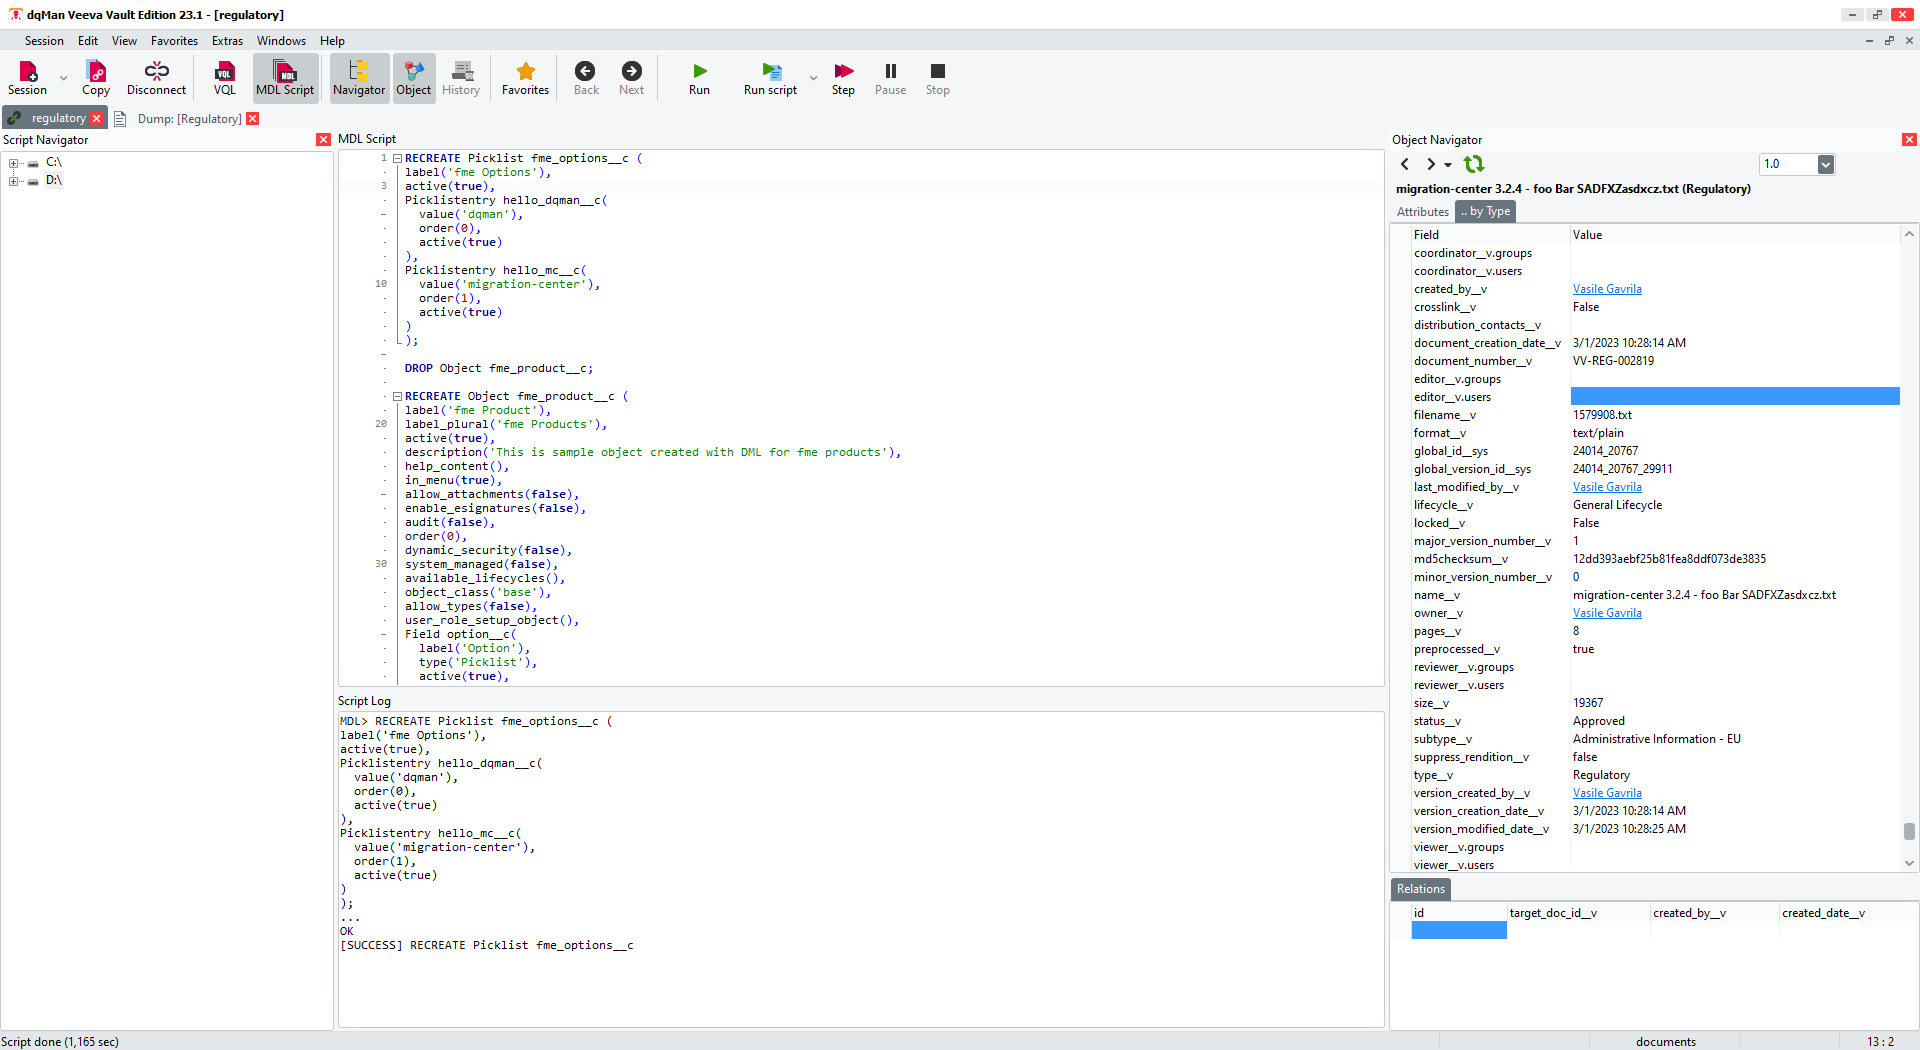 Screenshot | dqMan version to administer Veeva applications | 03